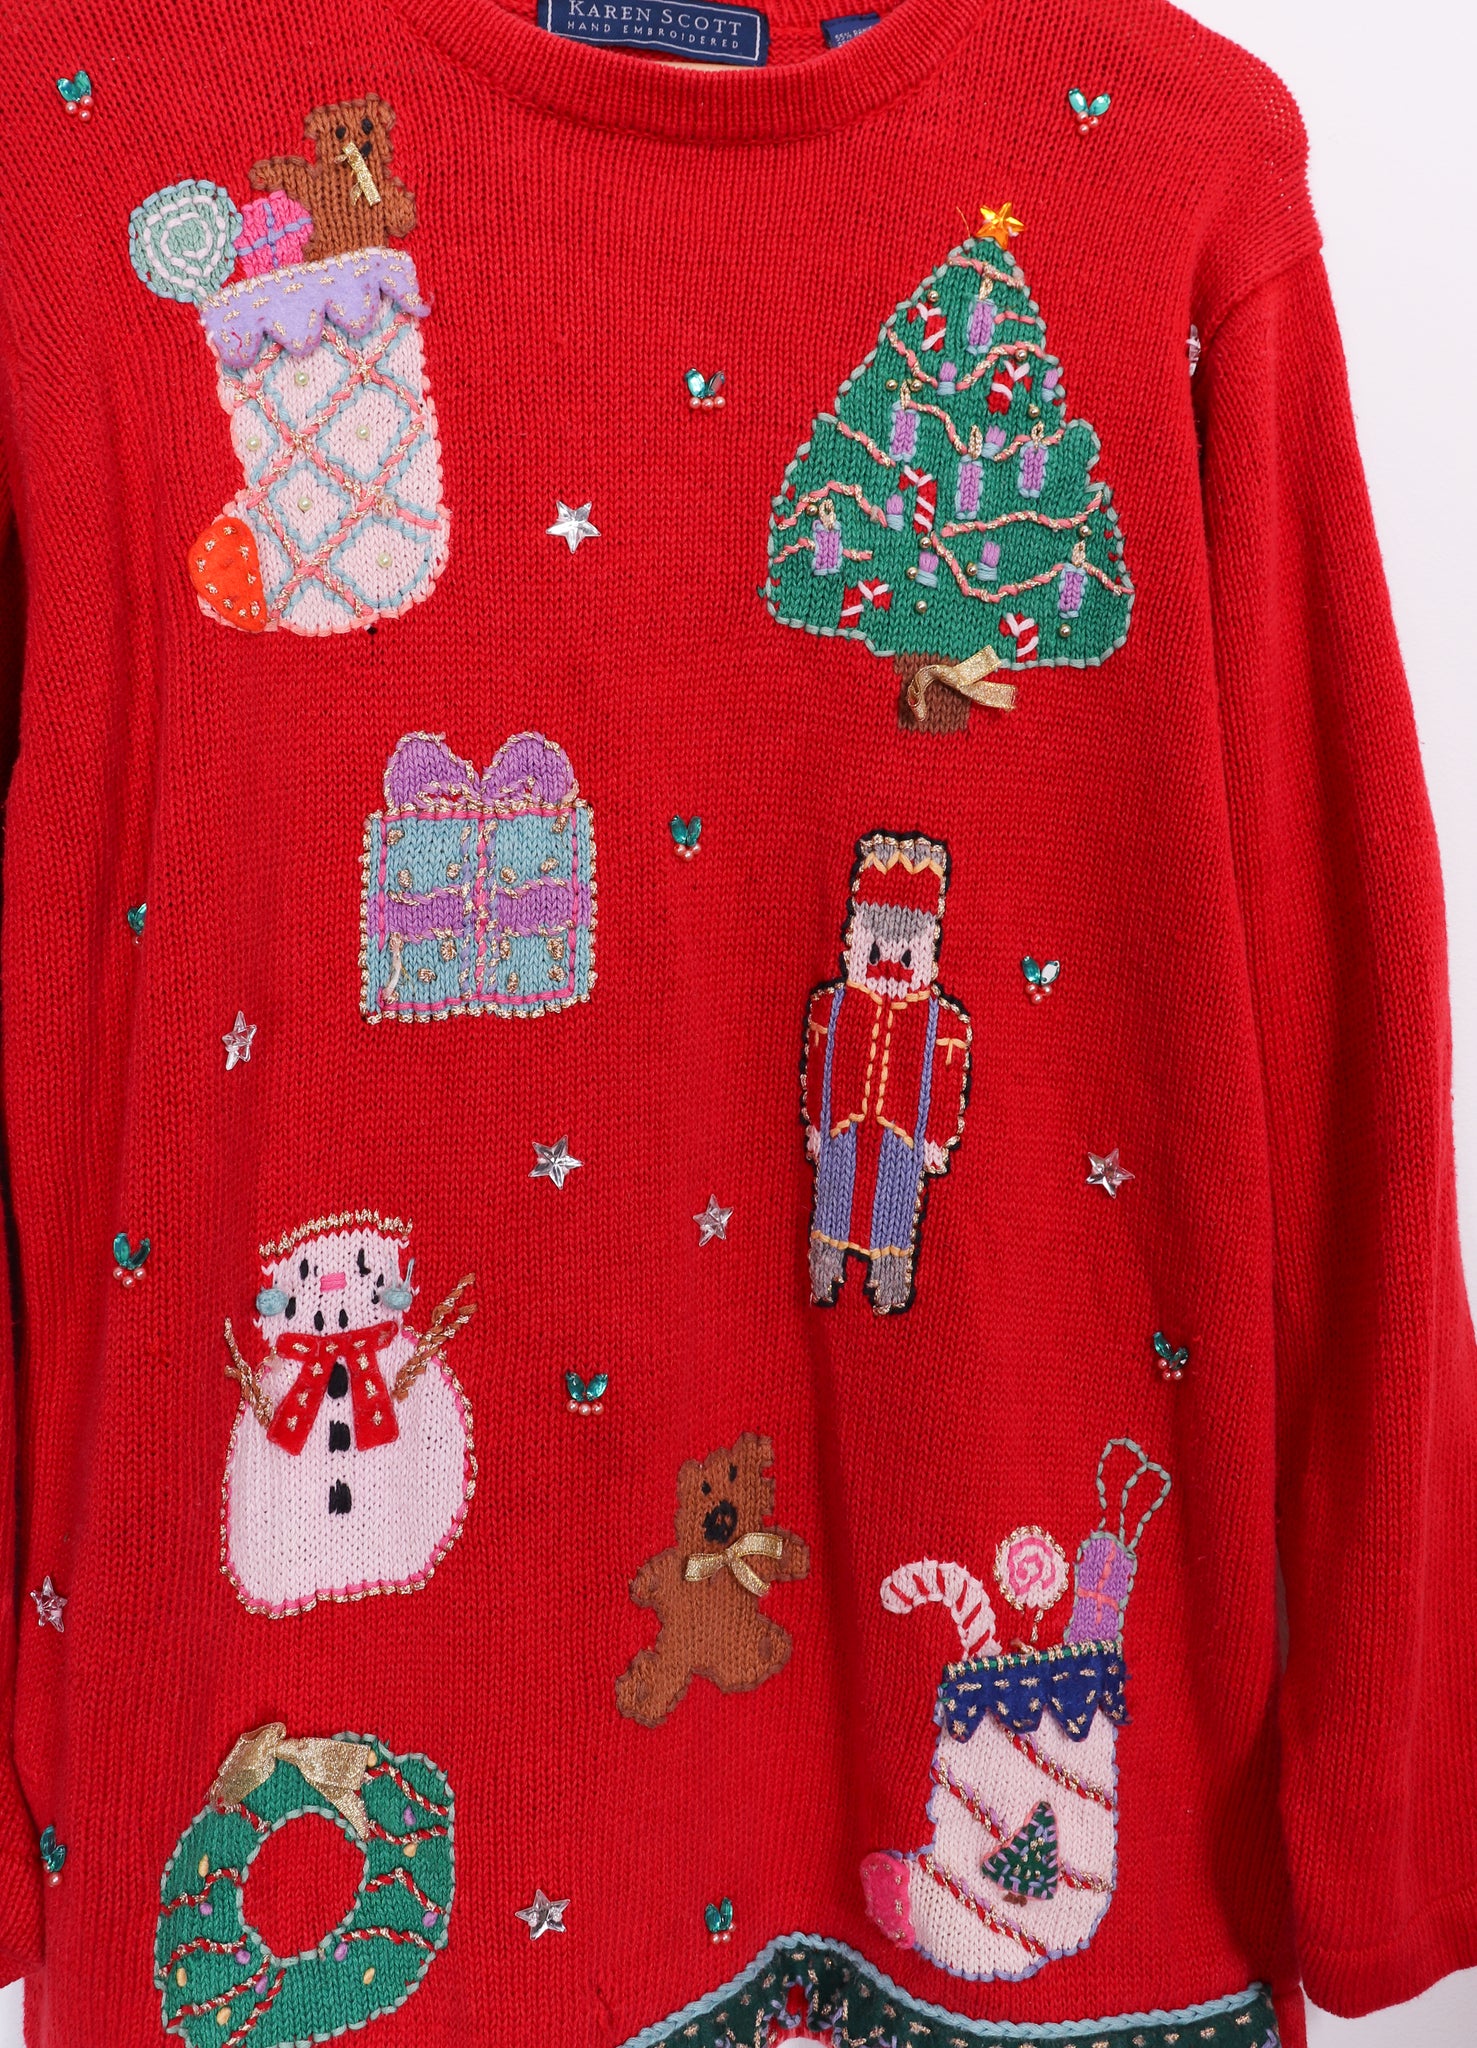 Karen Scott Embroidered Christmas Sweater